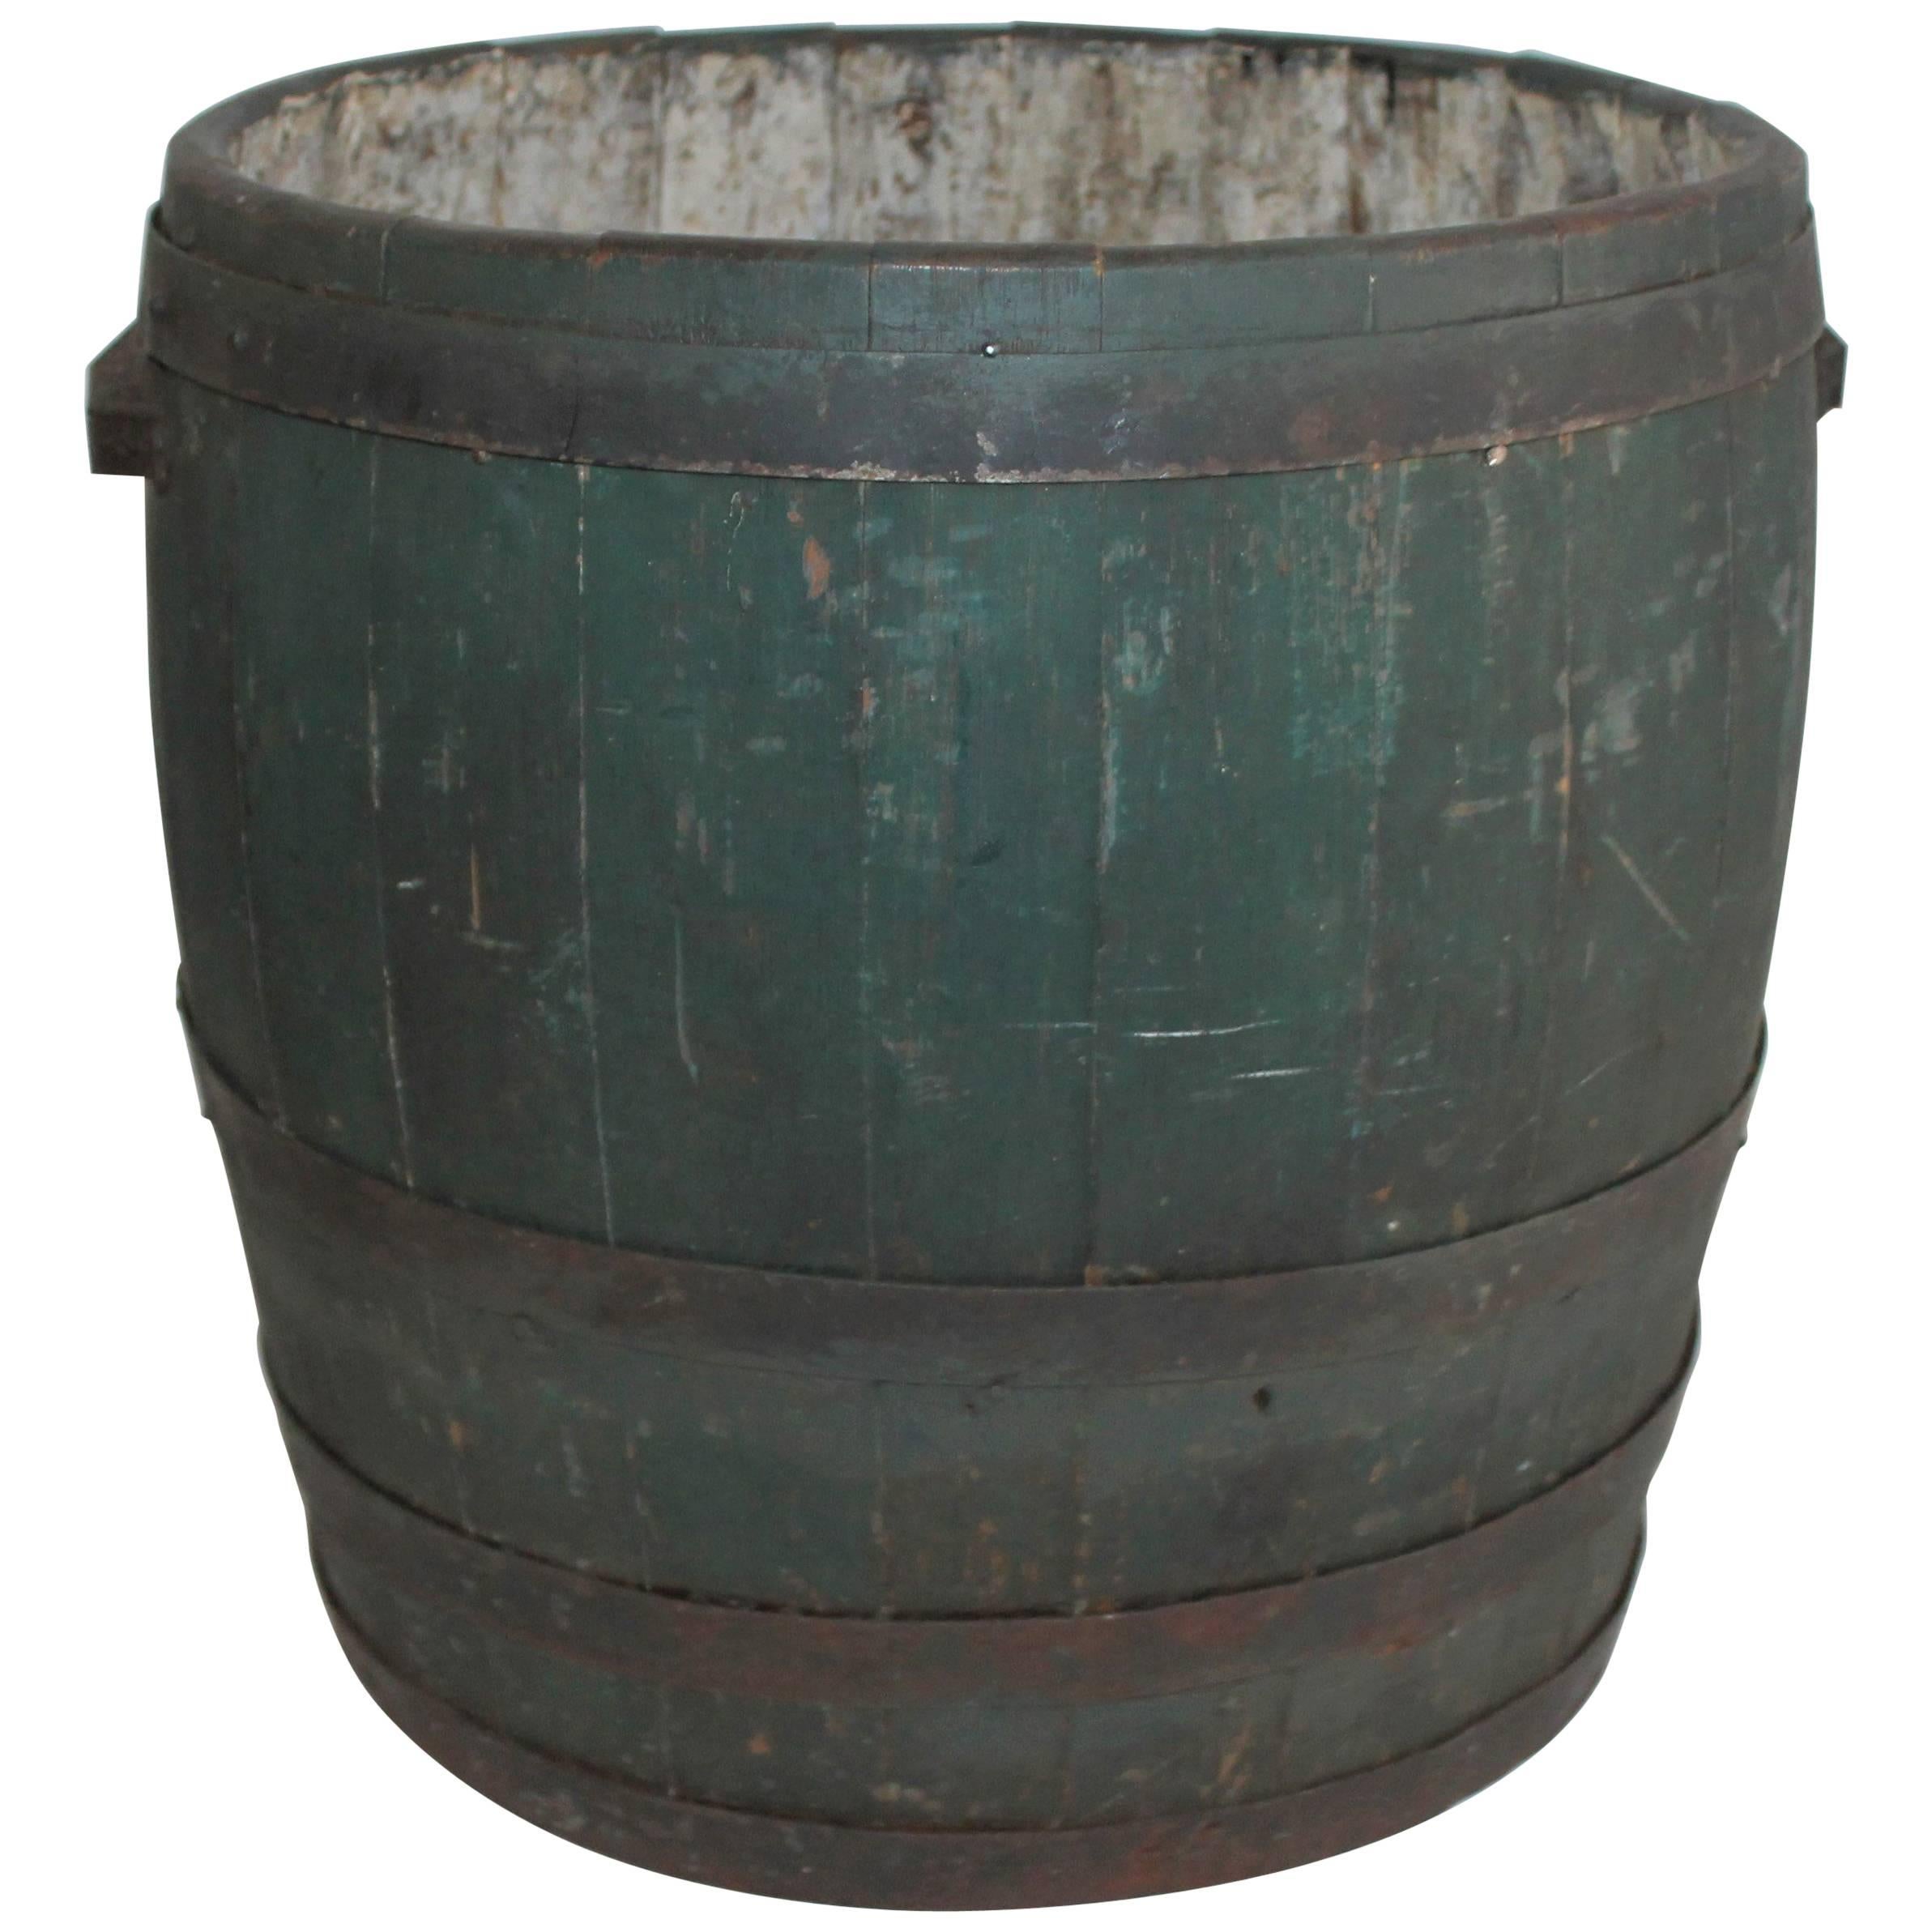 19th Century Original Green Painted Farm Barrel with Iron Handles